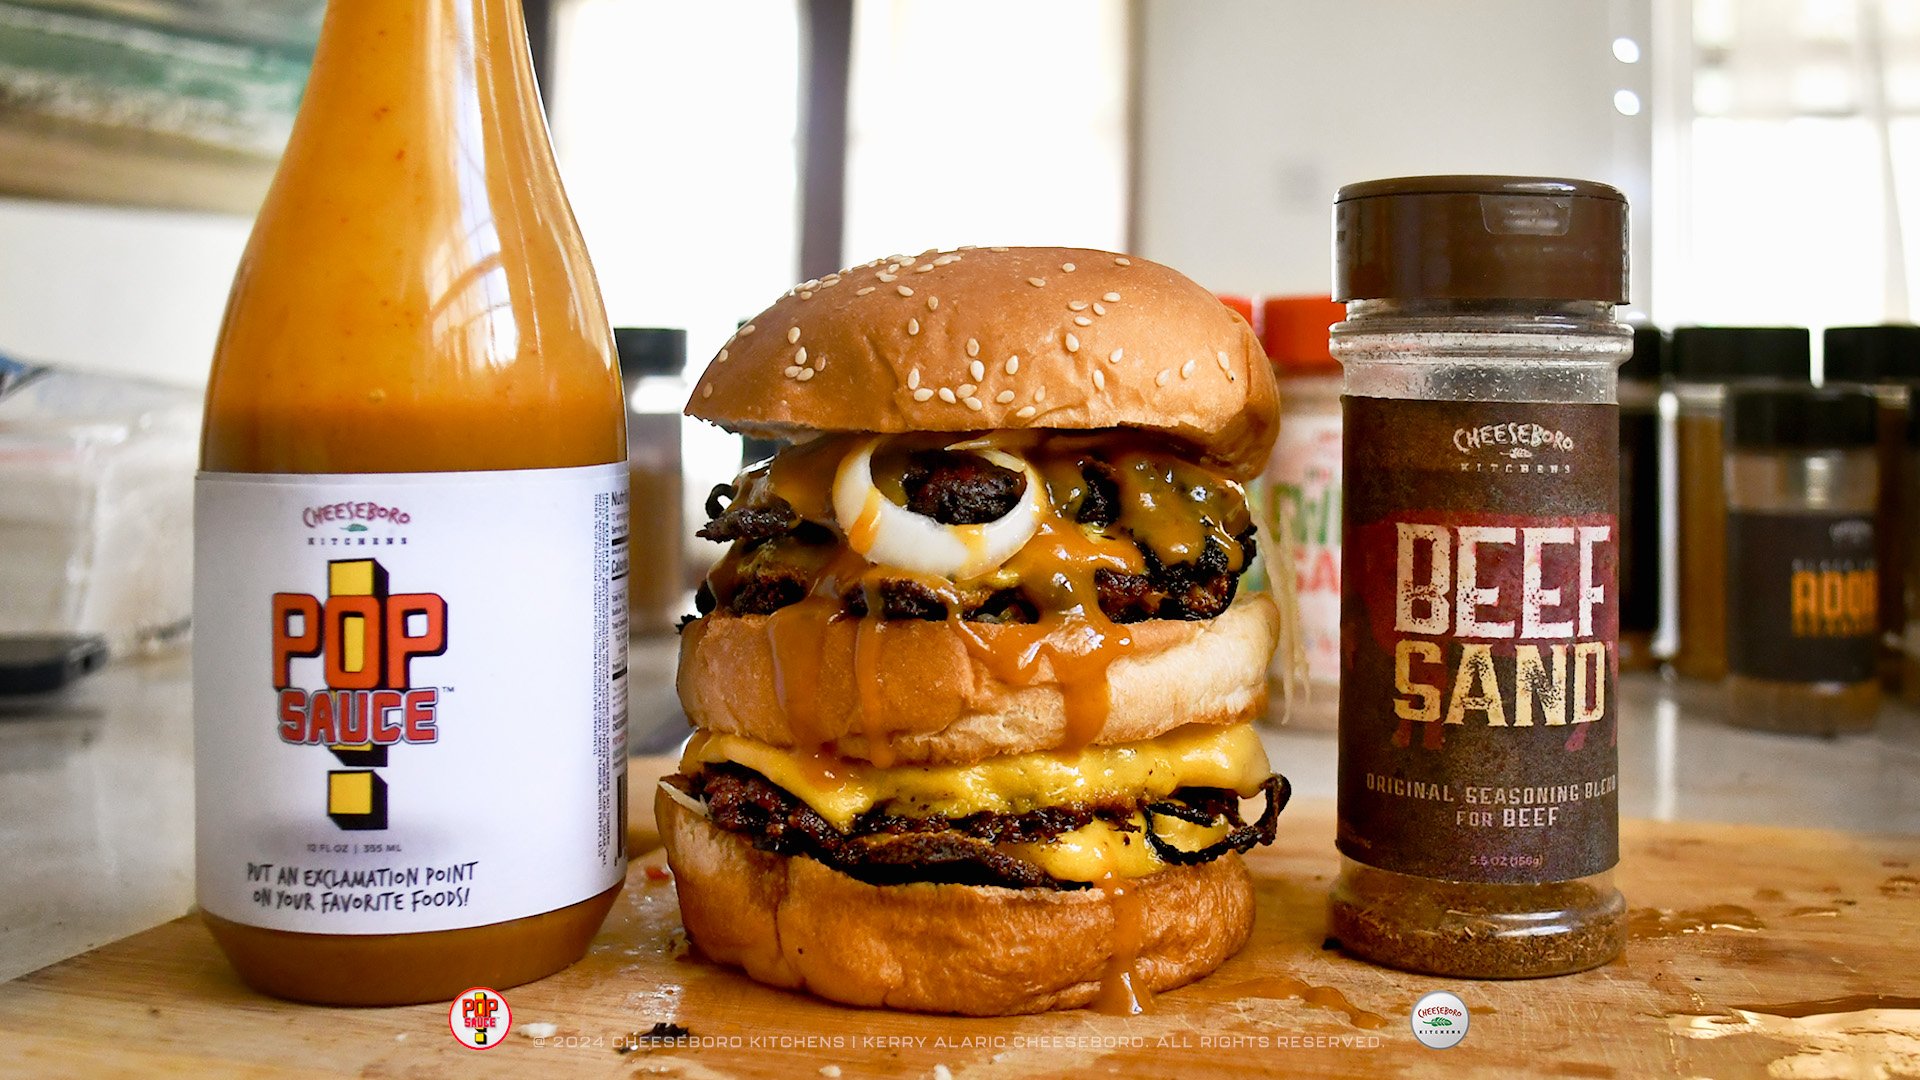 cheeskitch-240108-pop-sauce-usa-pop-smack-burger-with-bottle-and-beef-sand-jar1-1920-hor.jpg